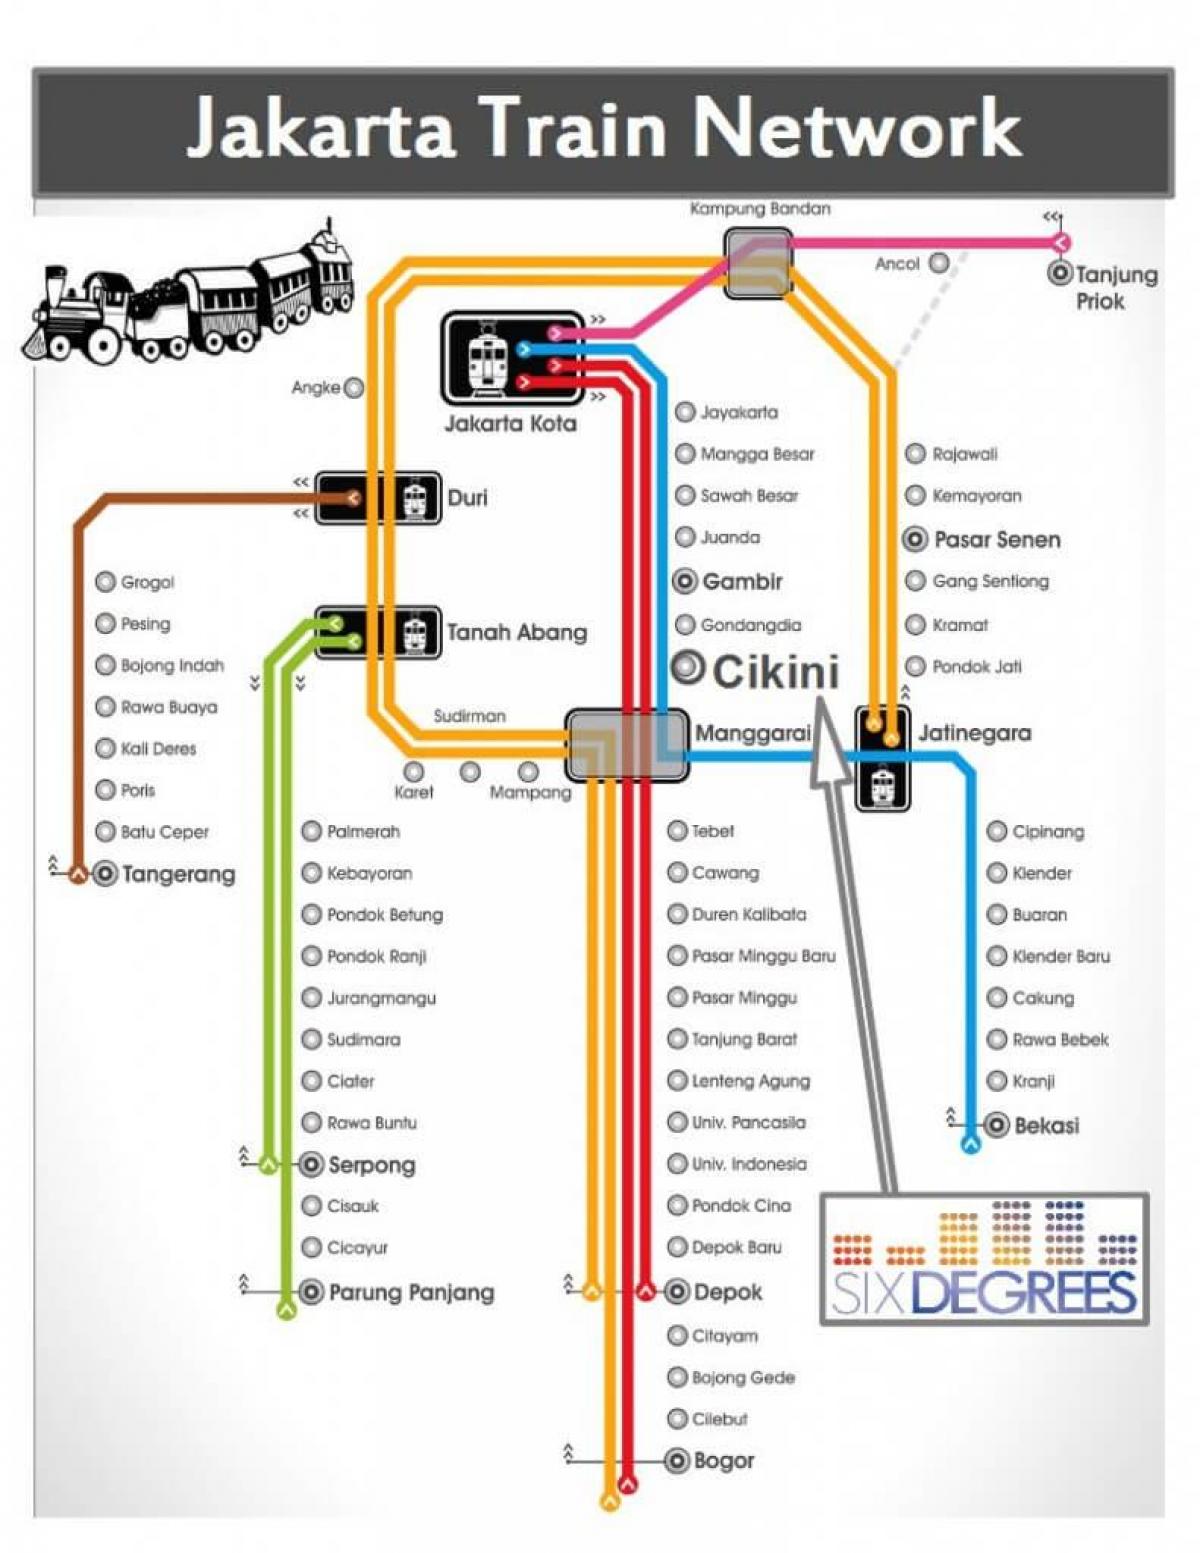 kartta Jakarta juna-asema